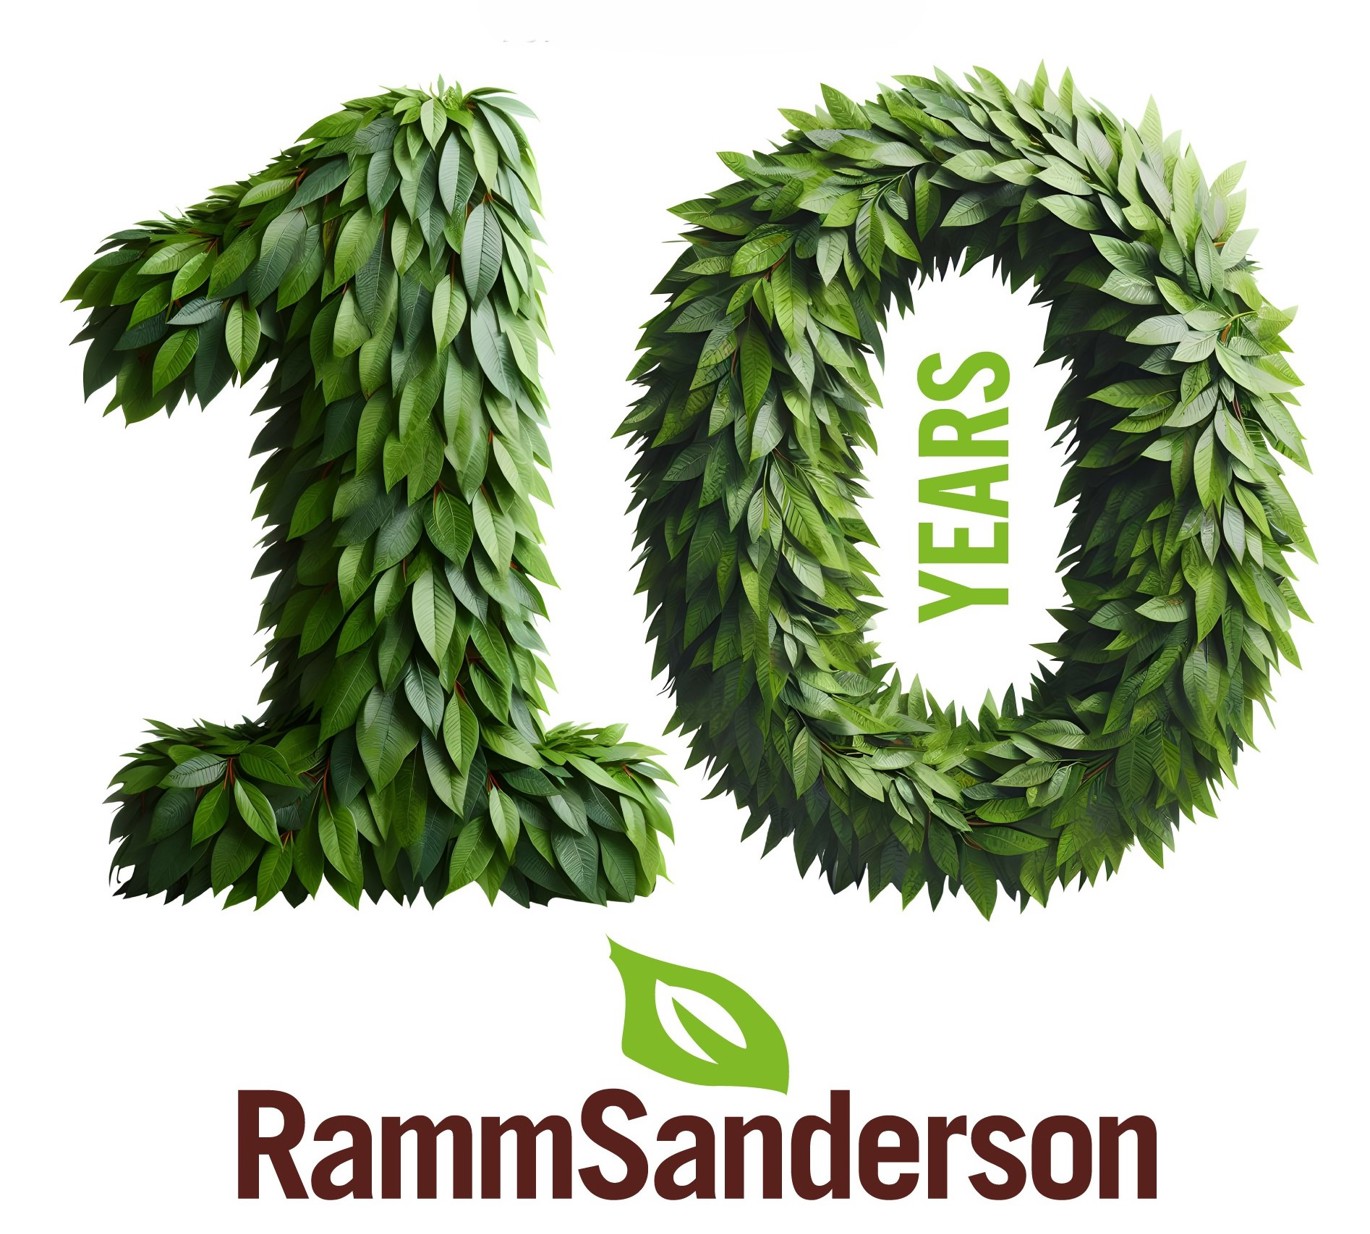 RammSanderson Celebrates 10 Years